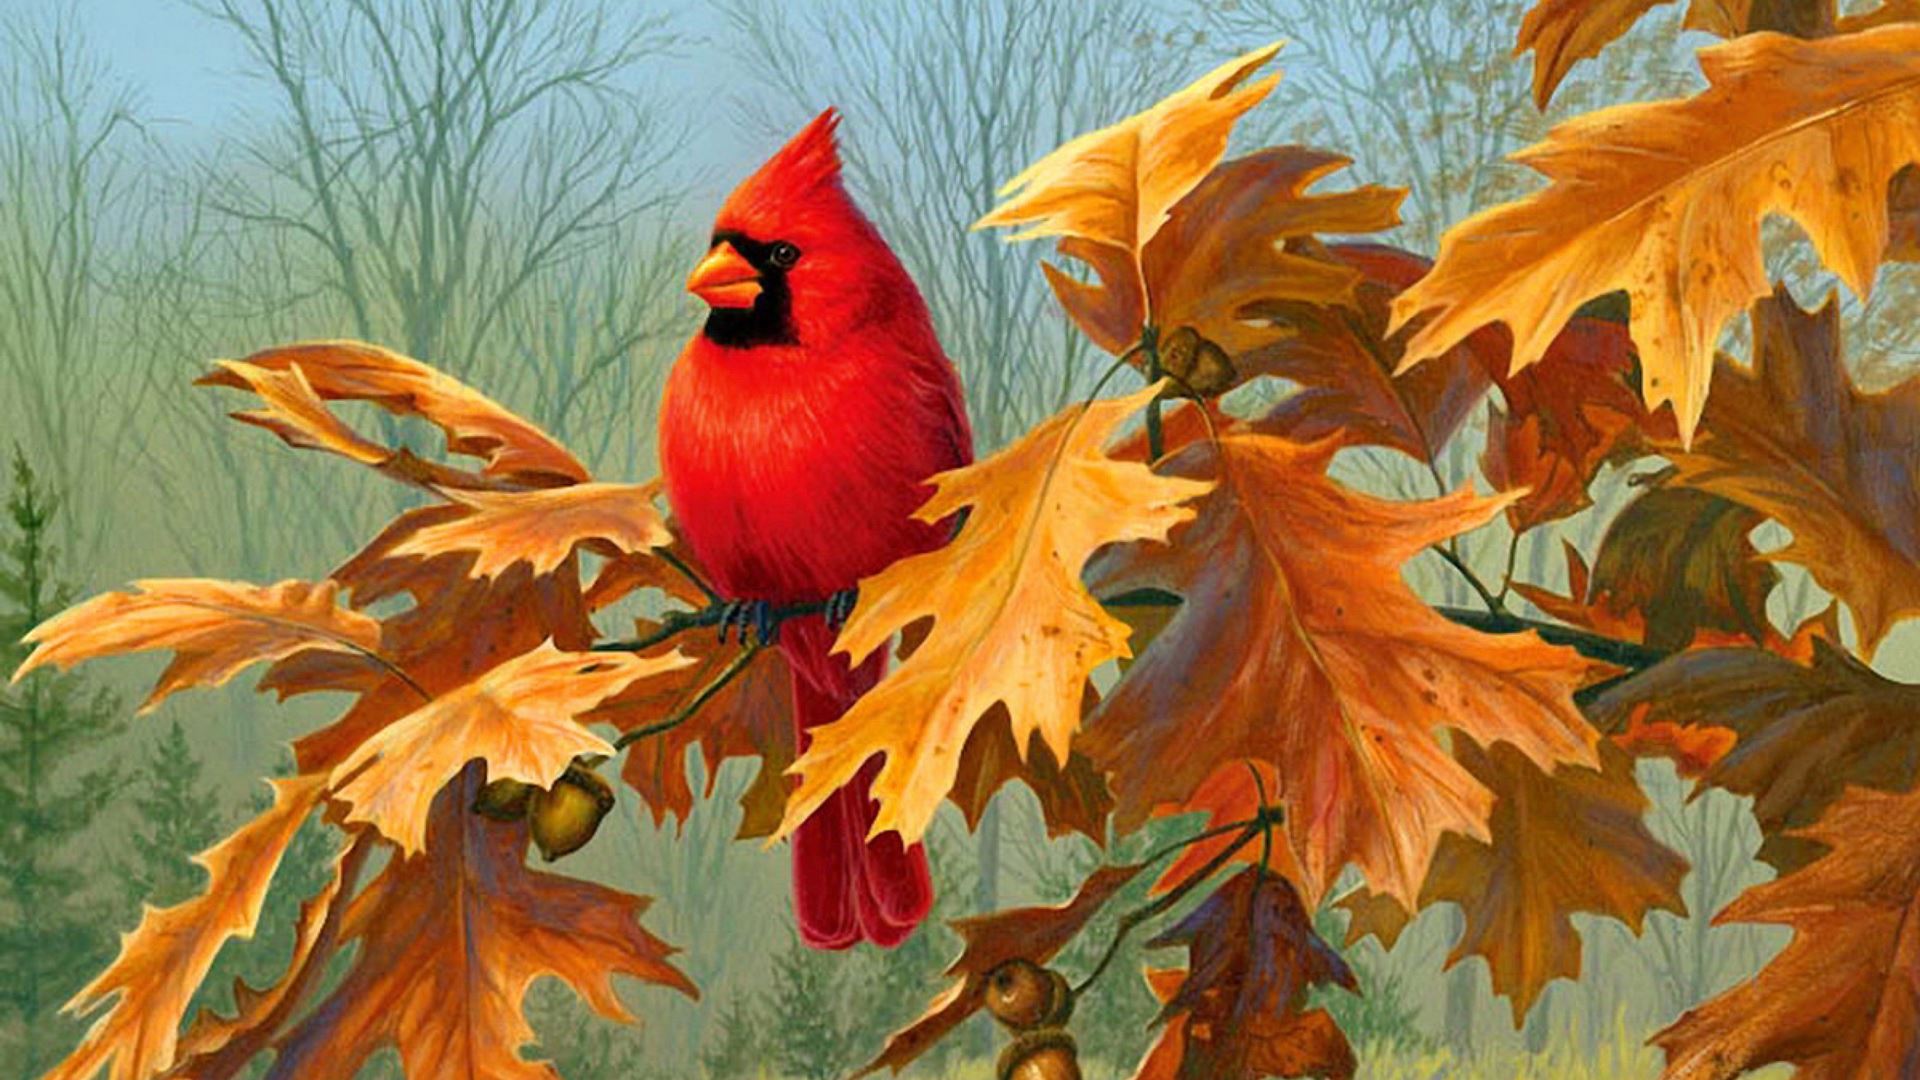 Animal Bird Cardinal Tree Leaf Branch Close Up Artistic Painting 1920x1080